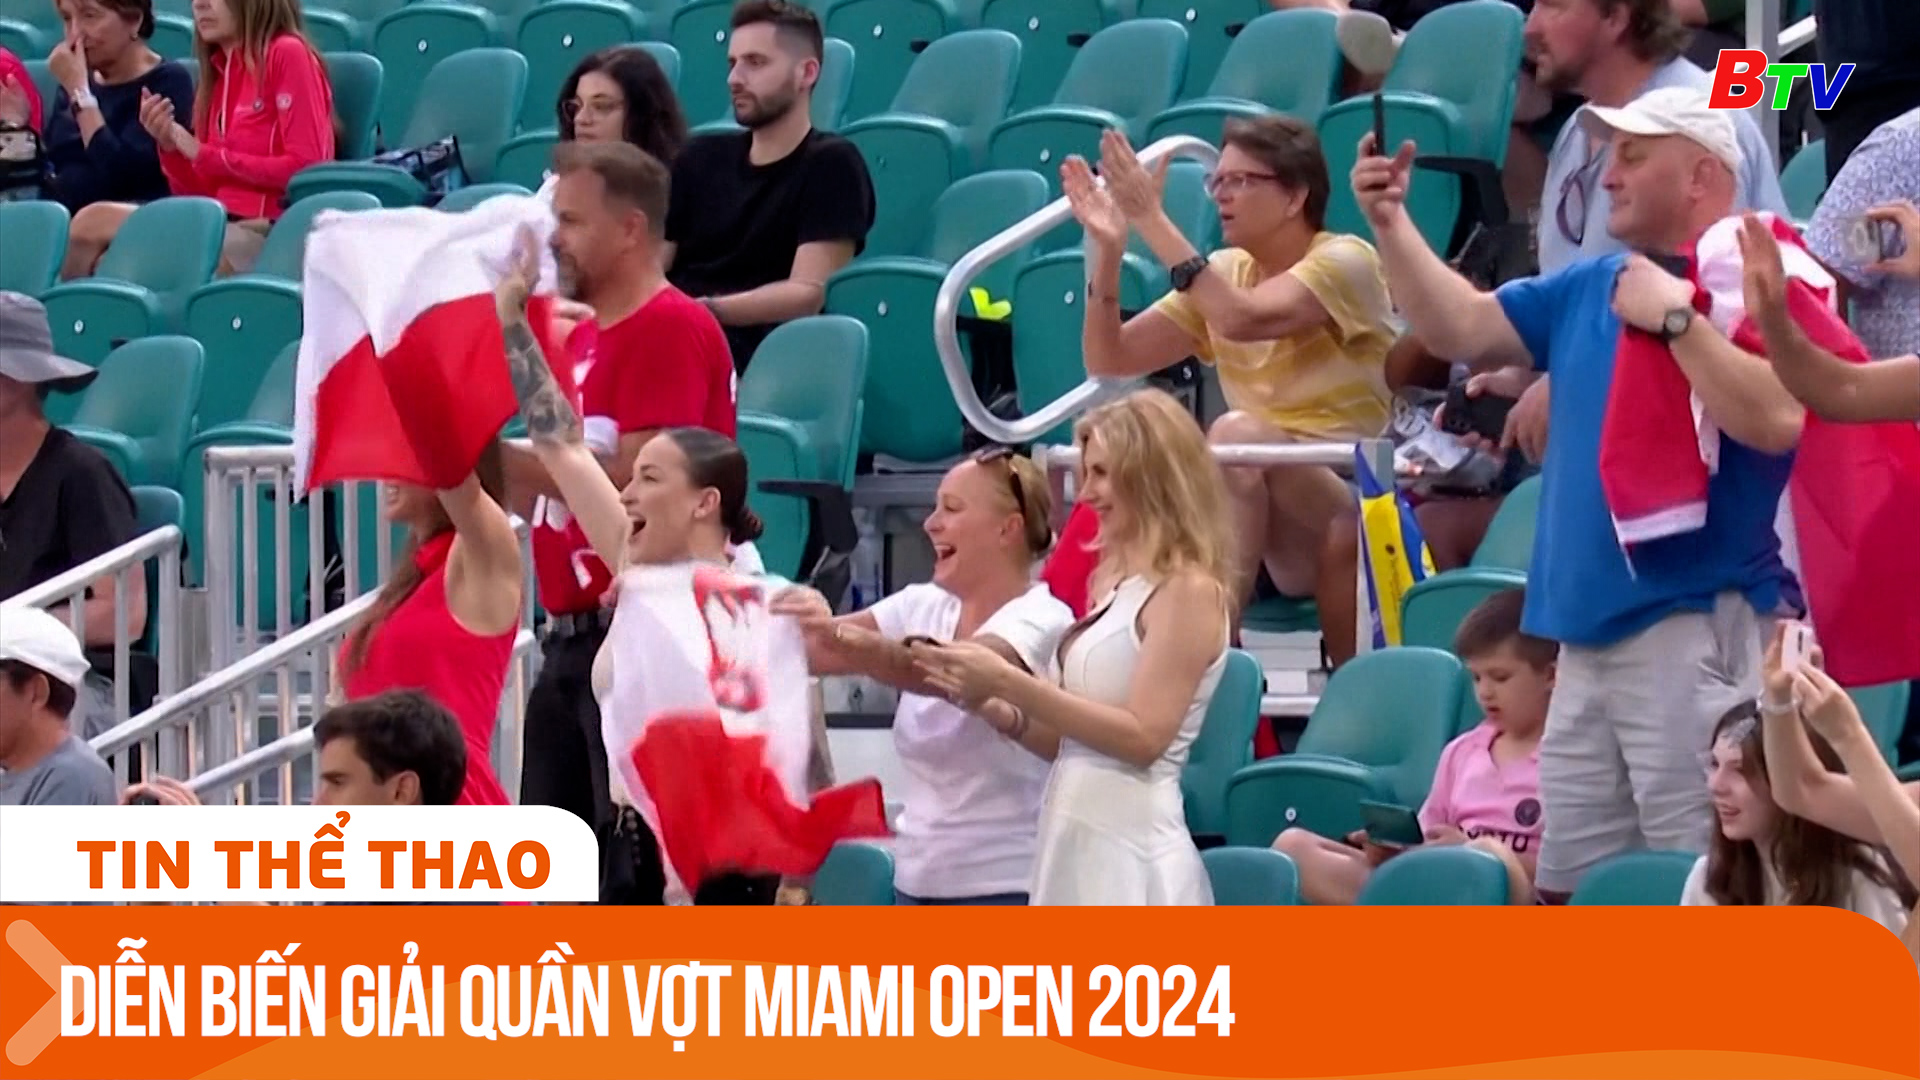 Diễn biến Giải quần vợt Miami Open 2024 | Tin Thể thao 24h	